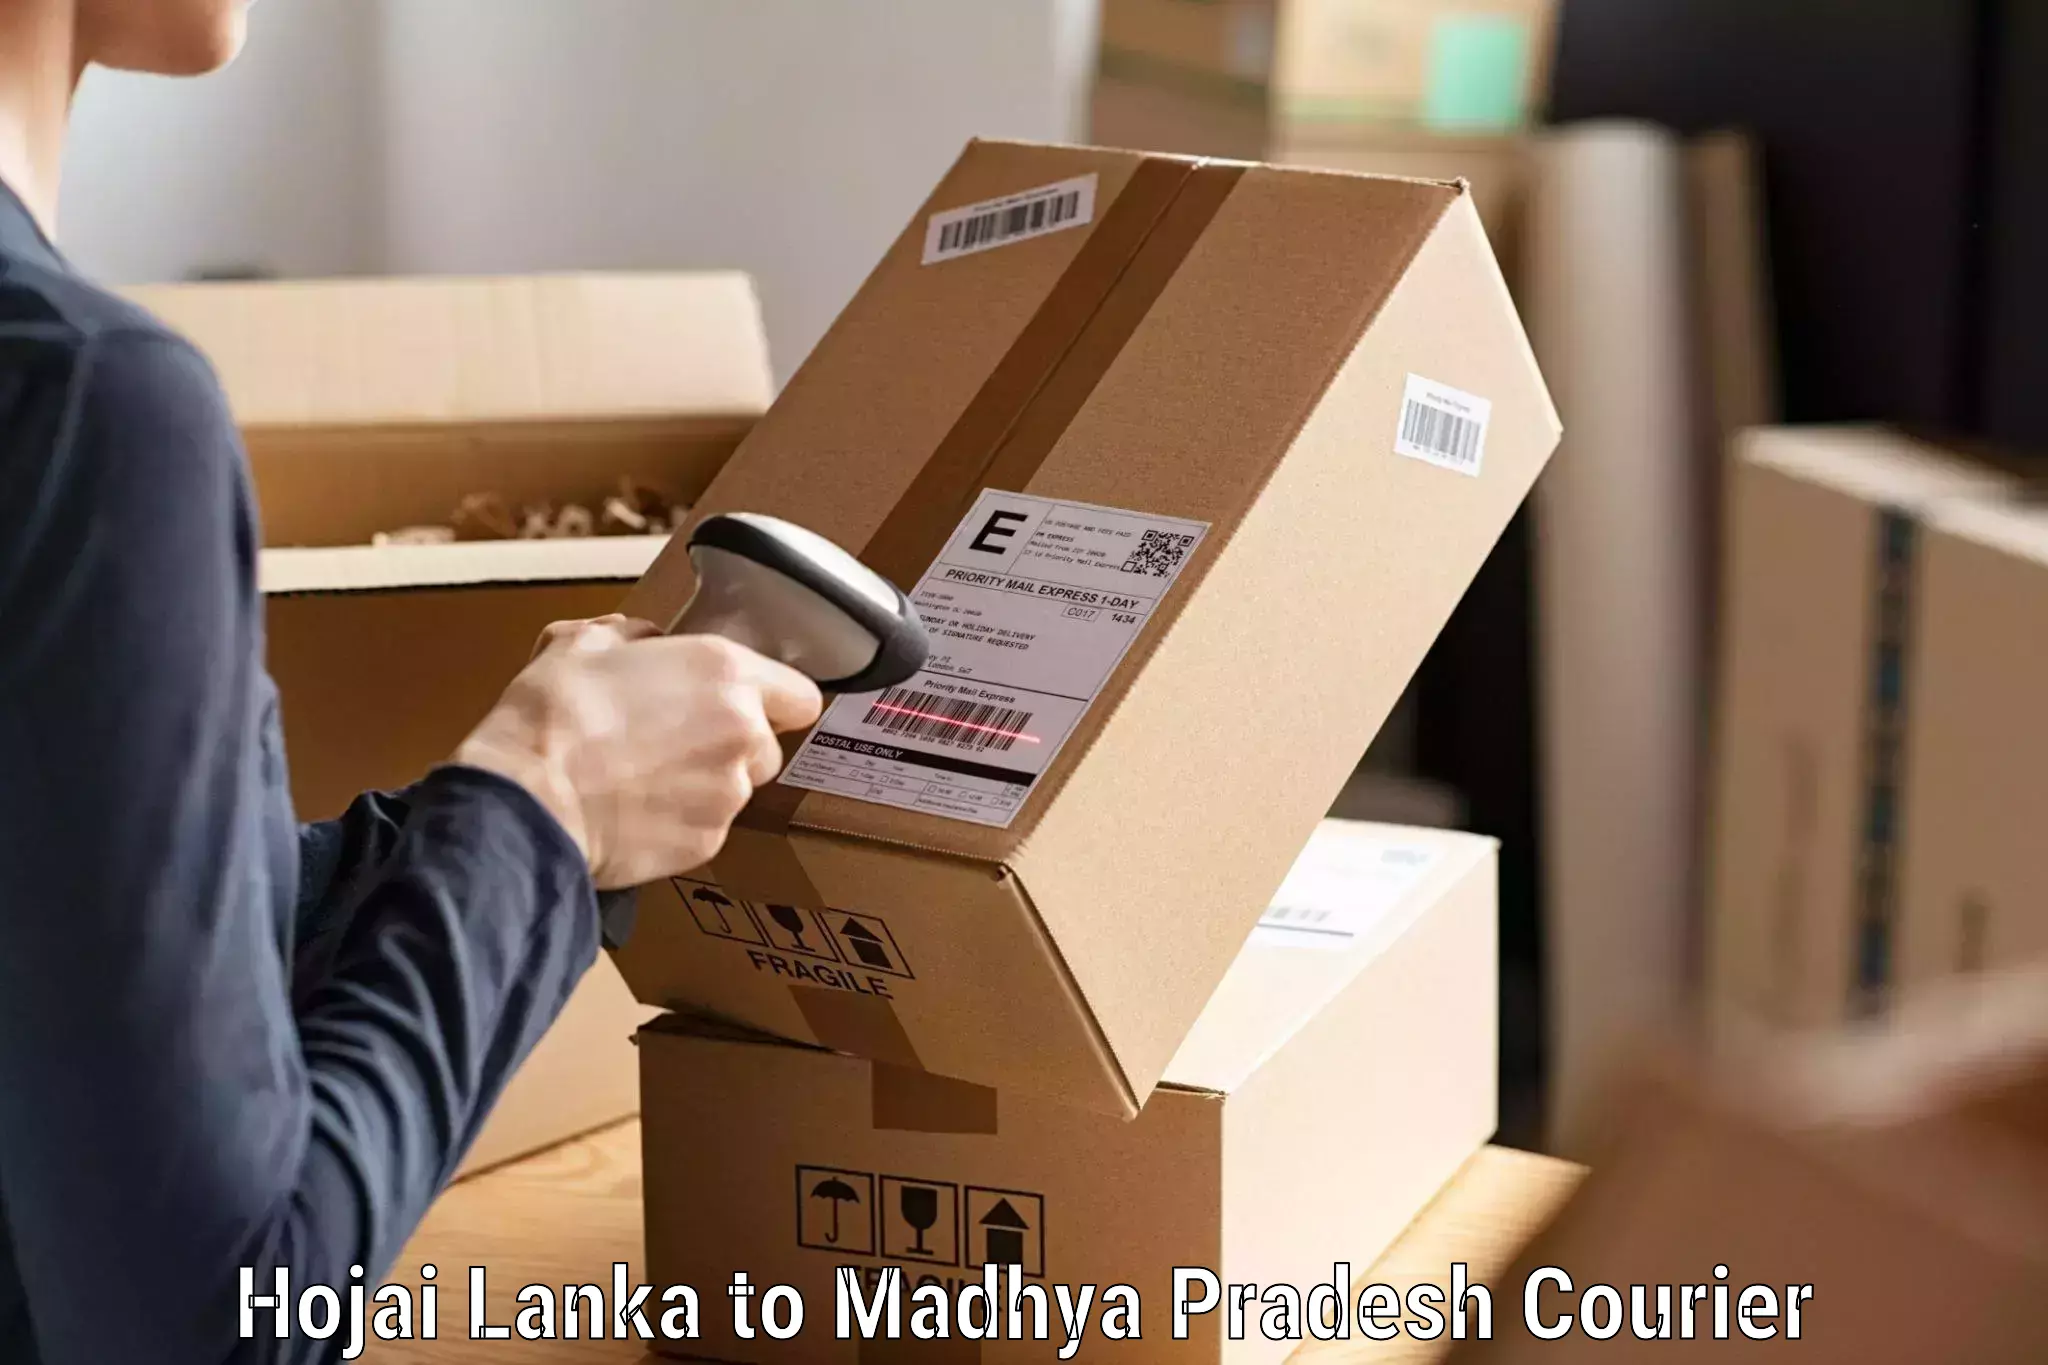 Courier service booking Hojai Lanka to Maheshwar